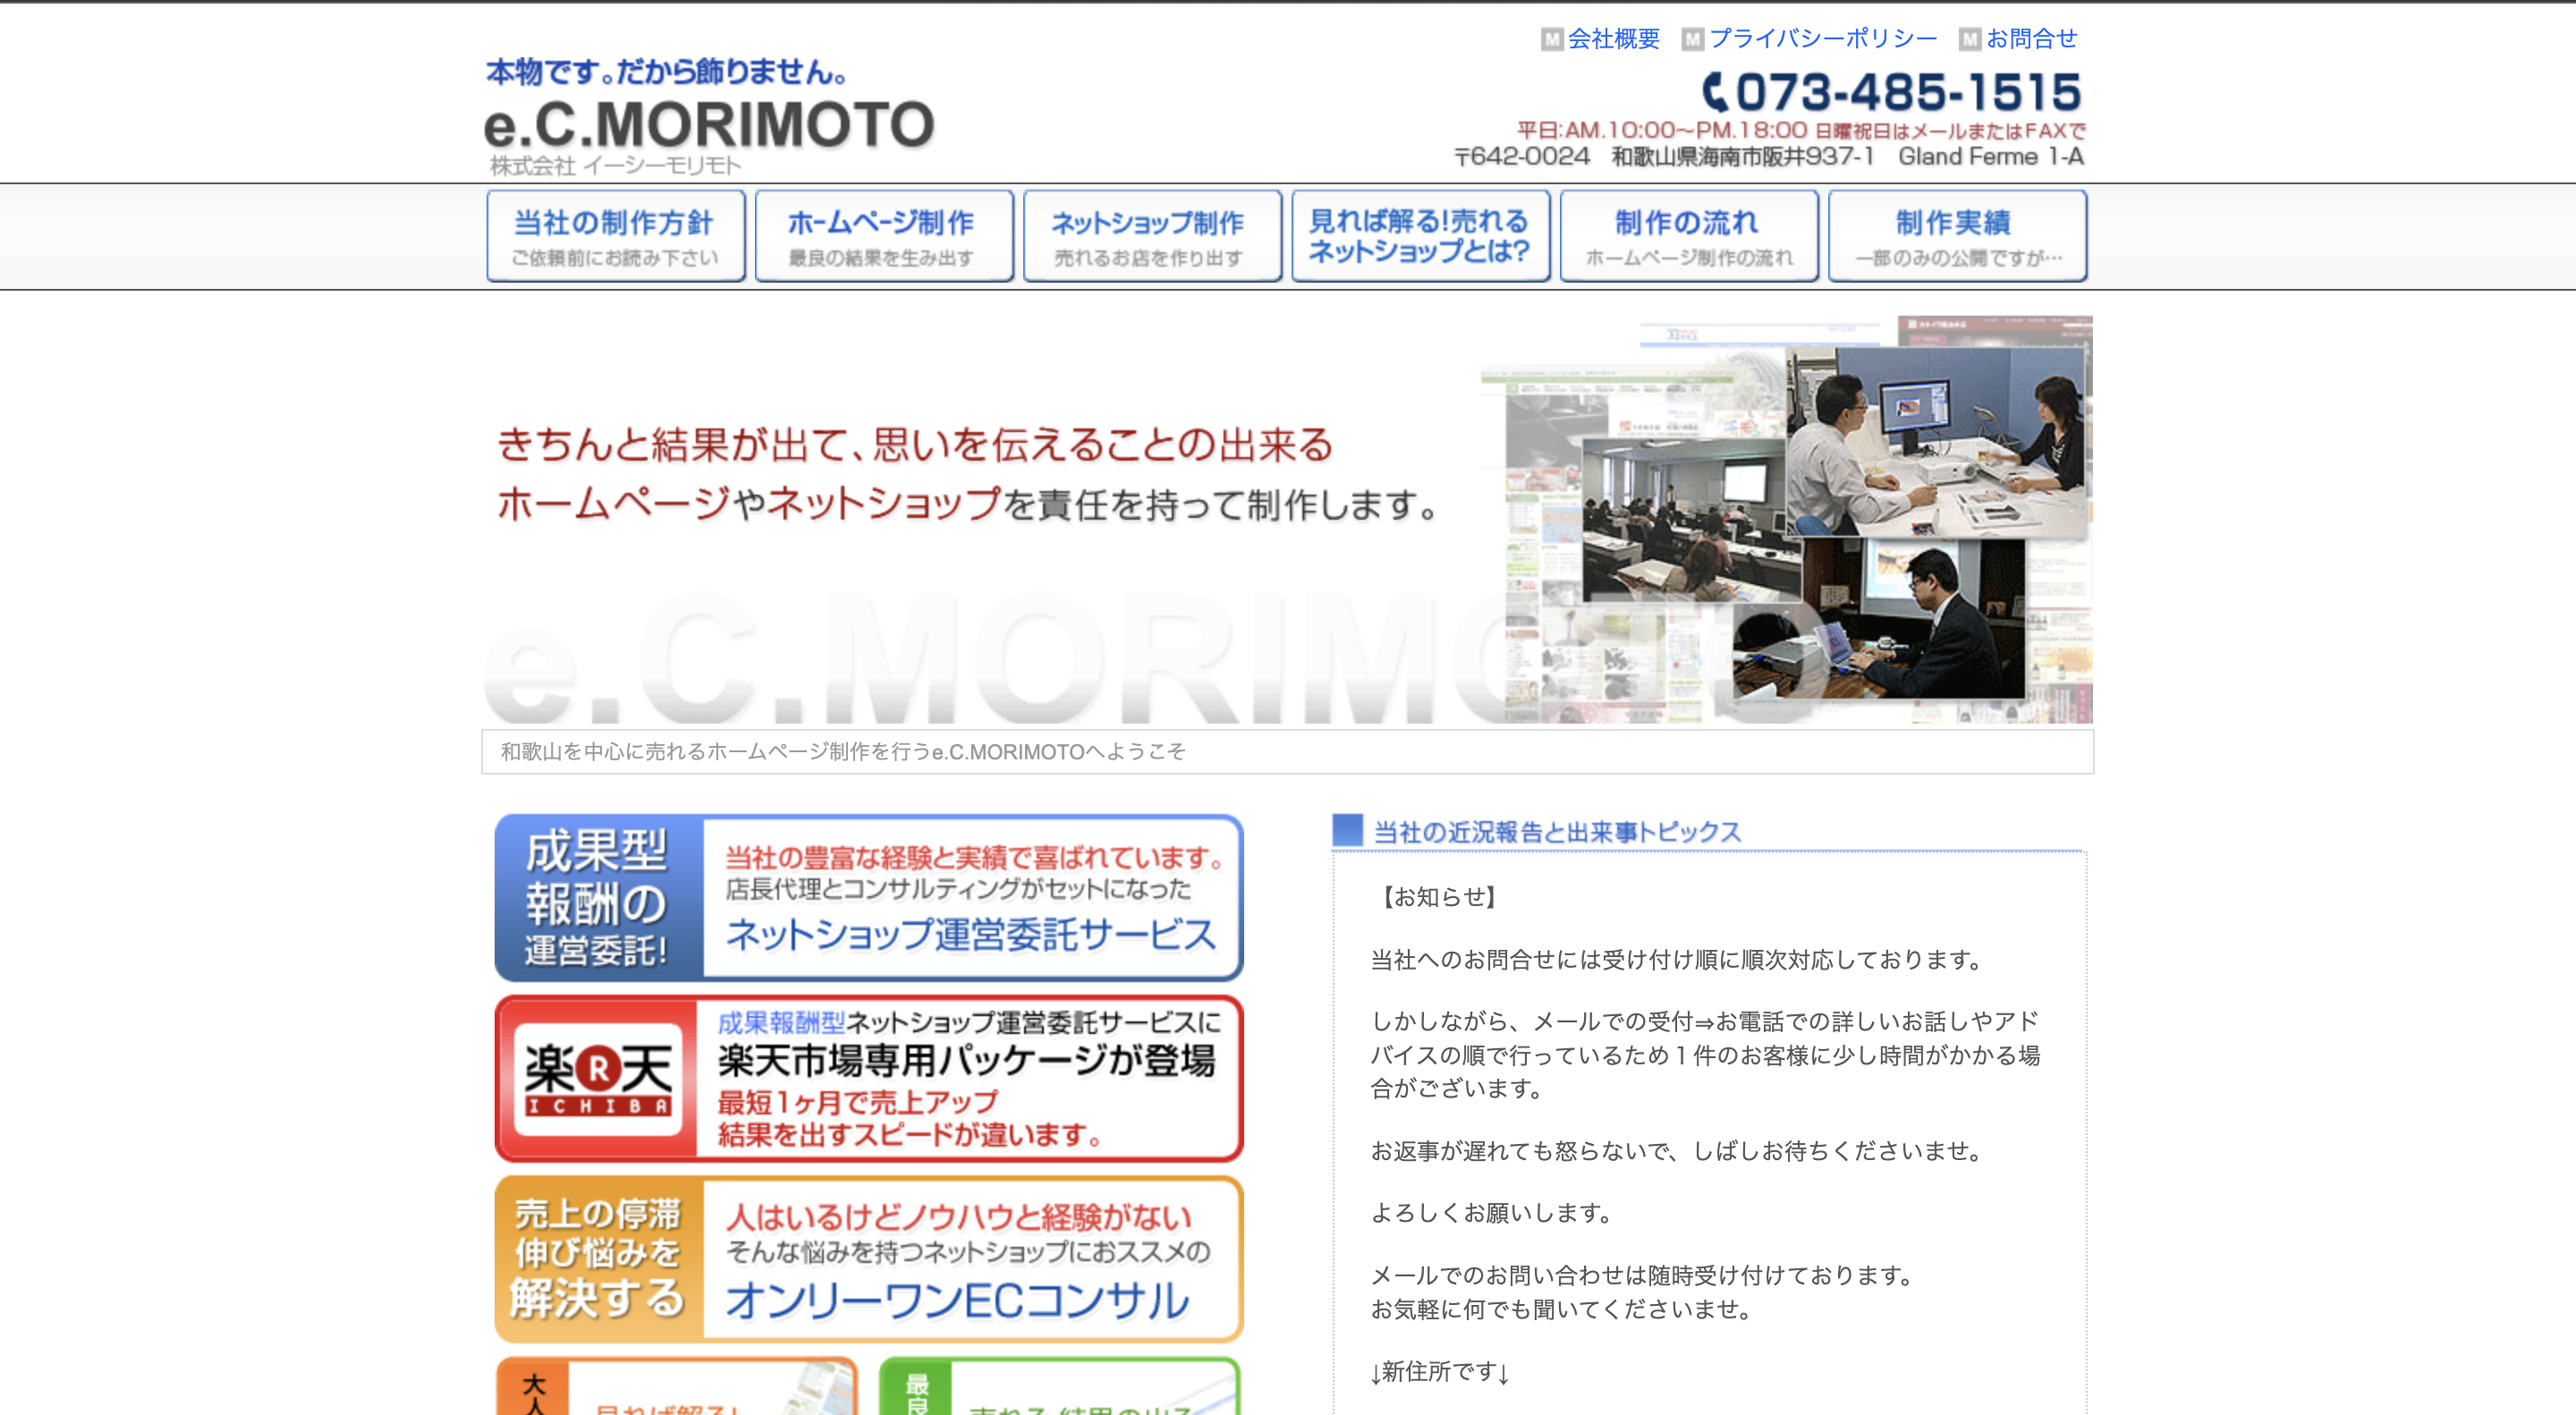 株式会社e.C. MORIMOTO